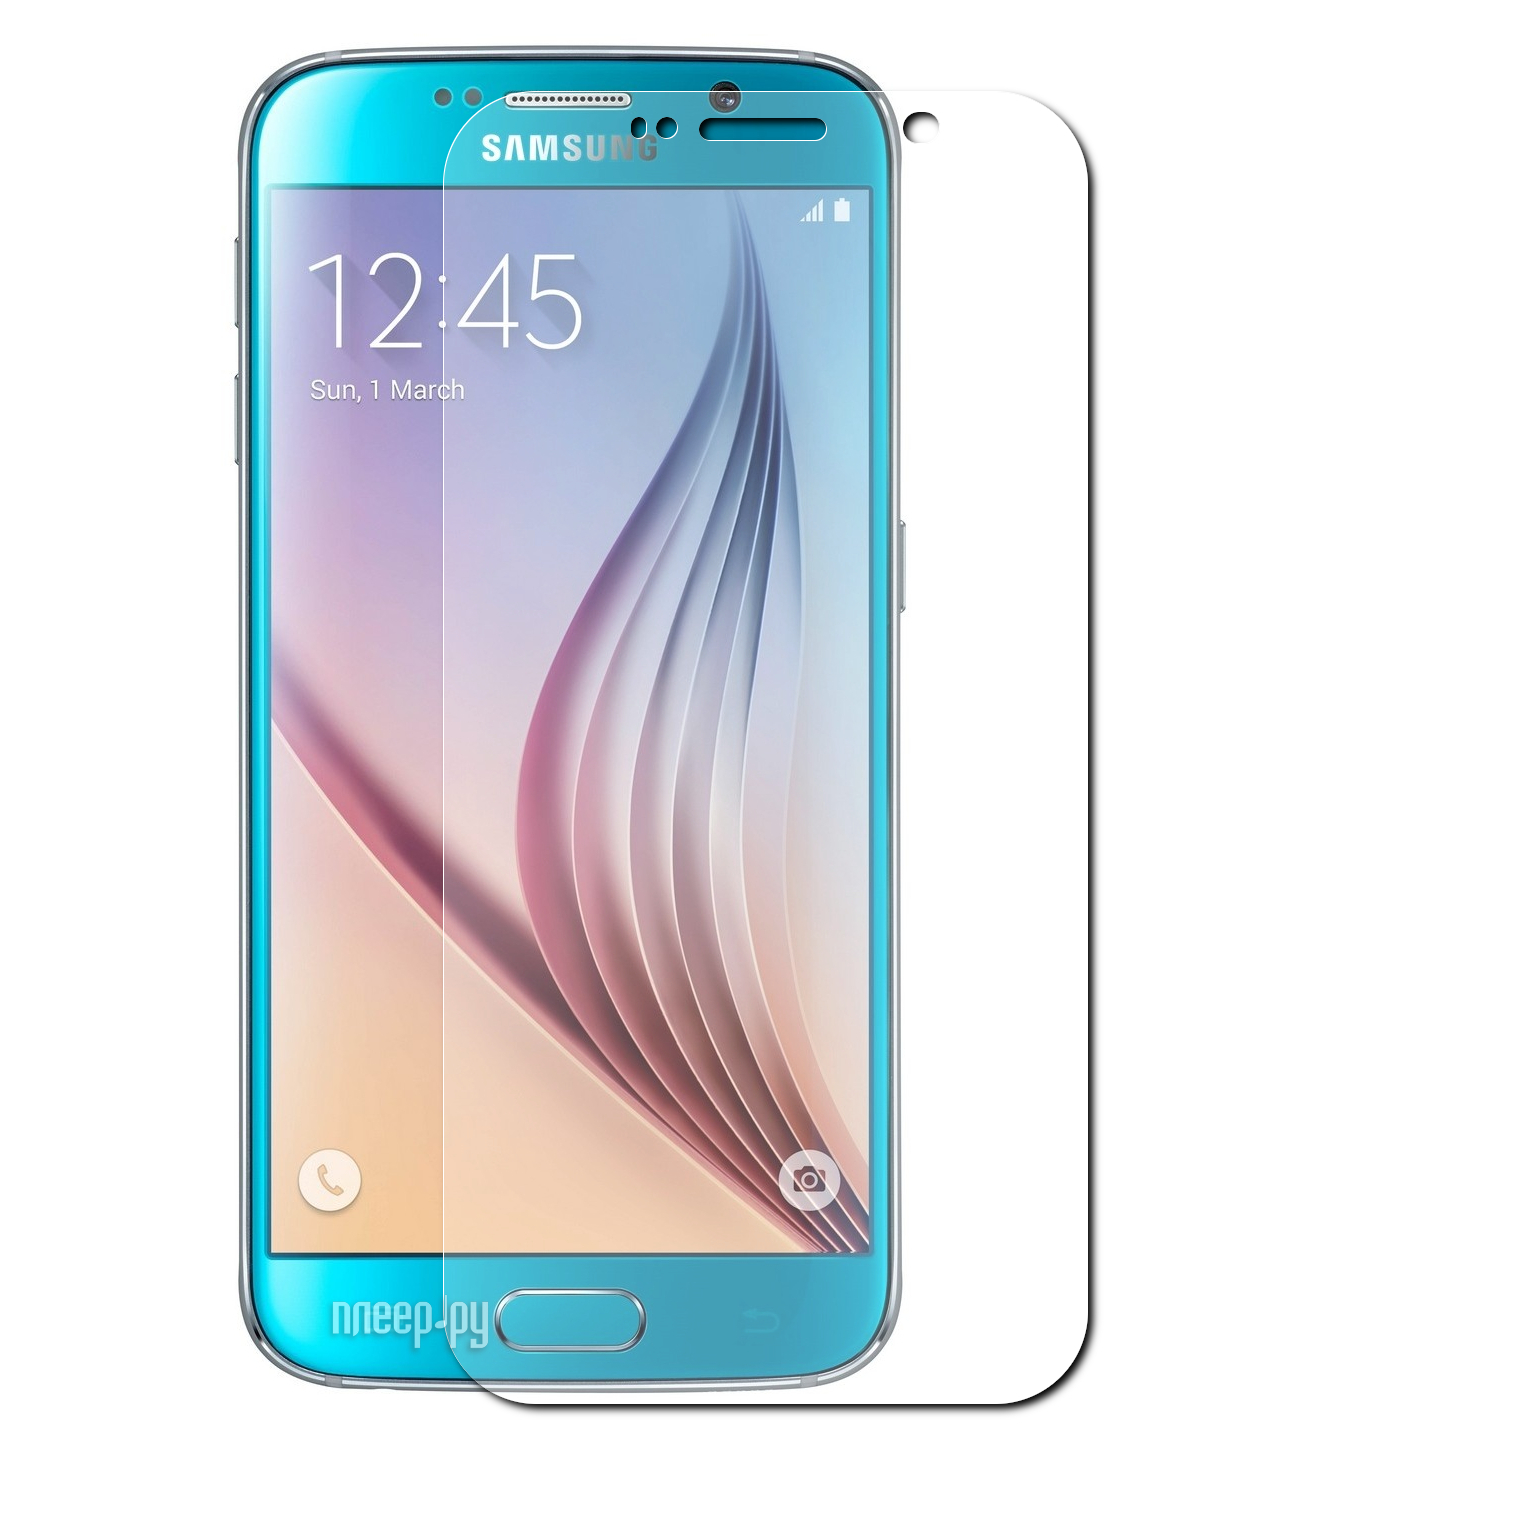    Samsung G920F Galaxy S6 Onext  40870  95 